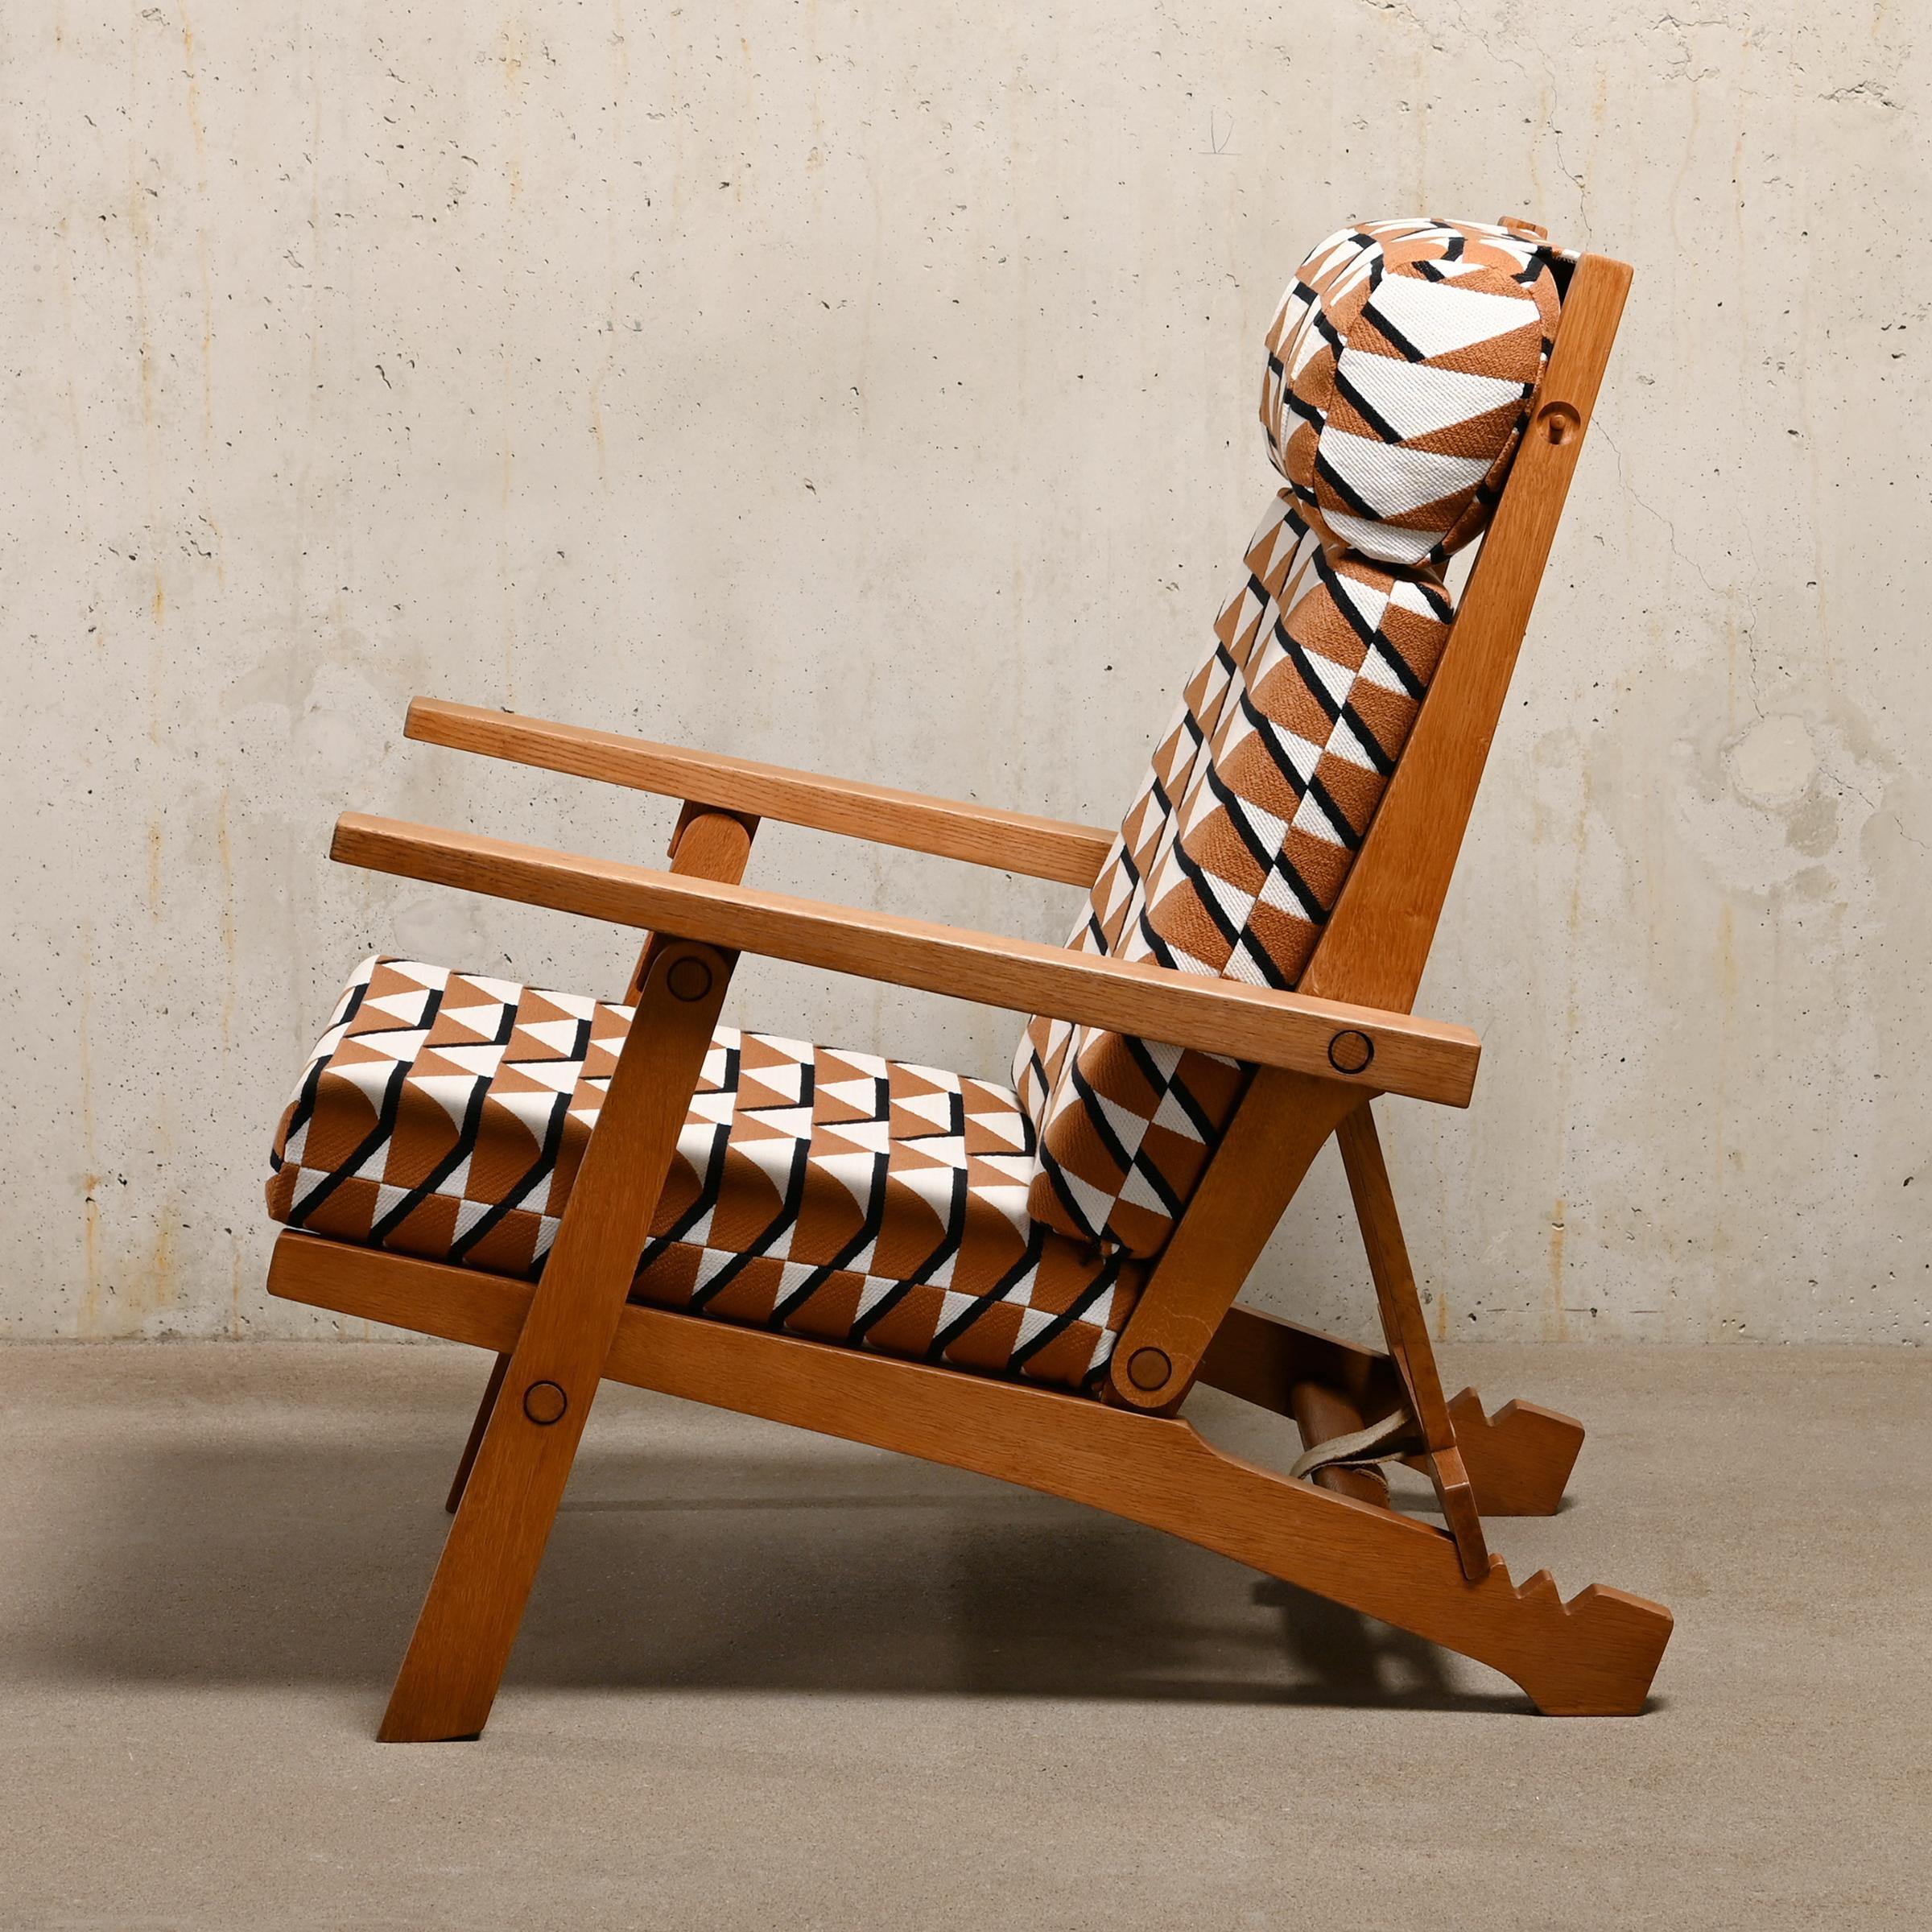 Scandinavian Modern Hans J. Wegner Lounge Chair AP 72 in Oak and Pierre Frey fabric for AP Stolen